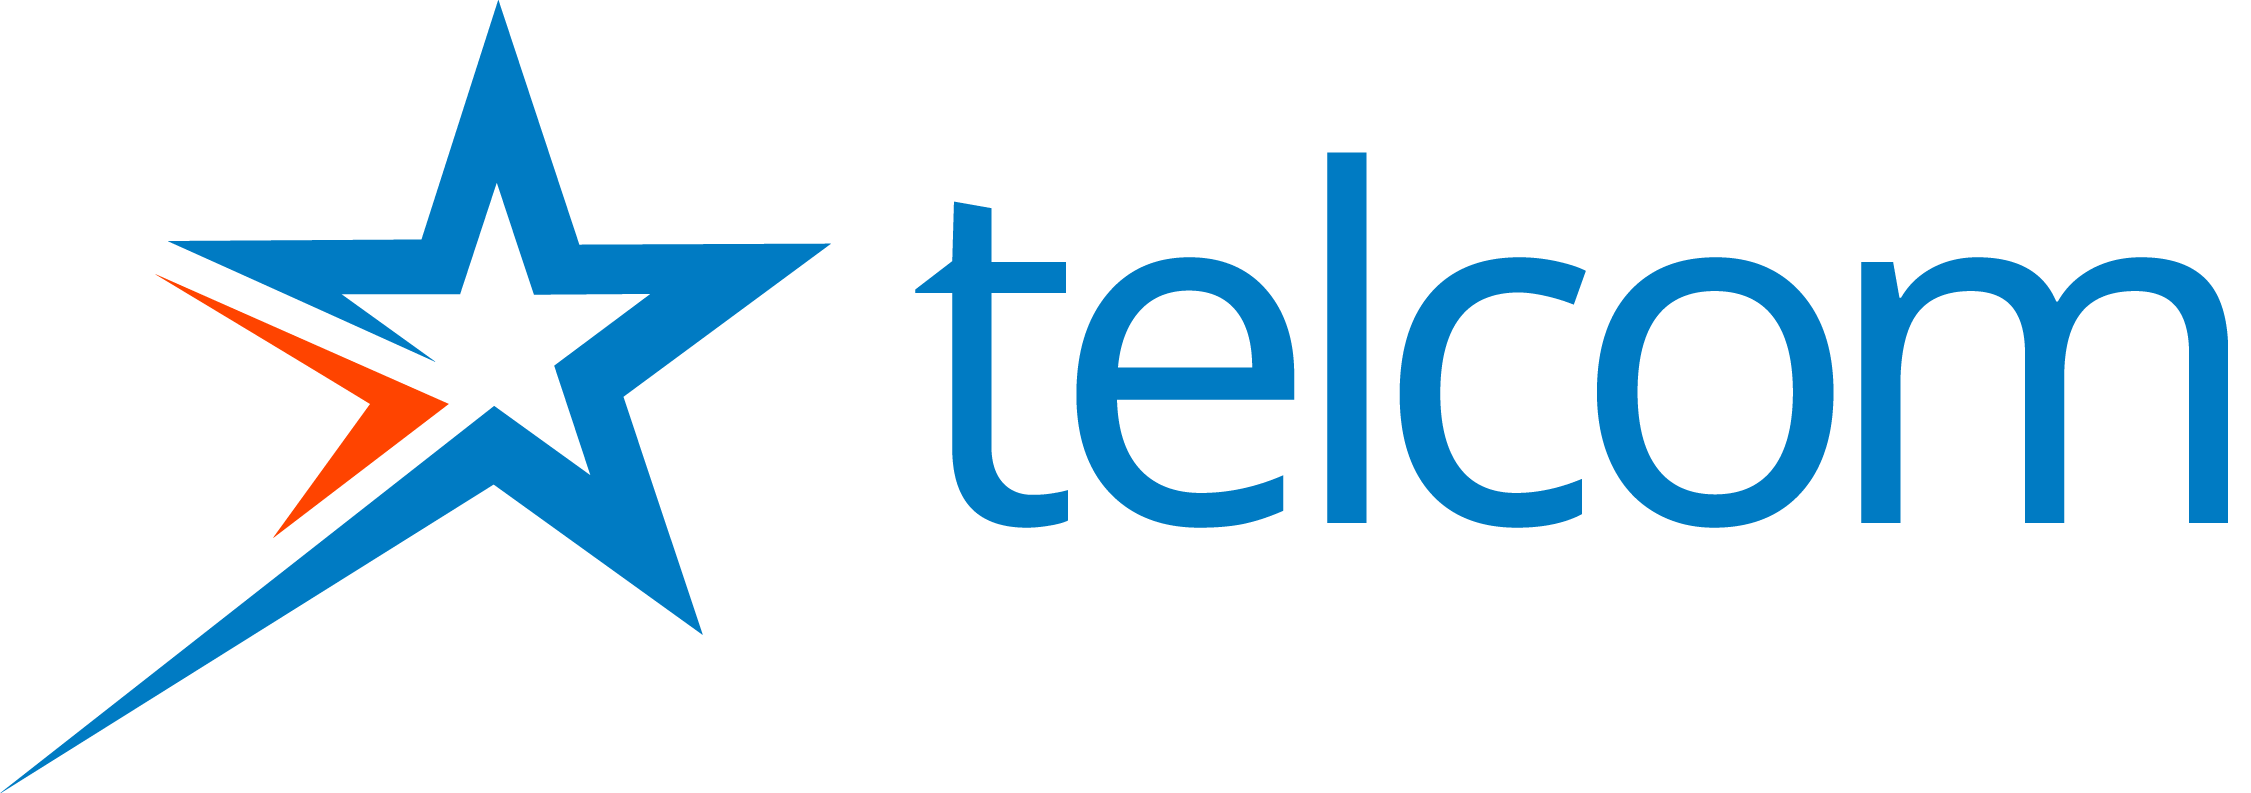 Individual Logo - Telcom logo downloads & guidelines